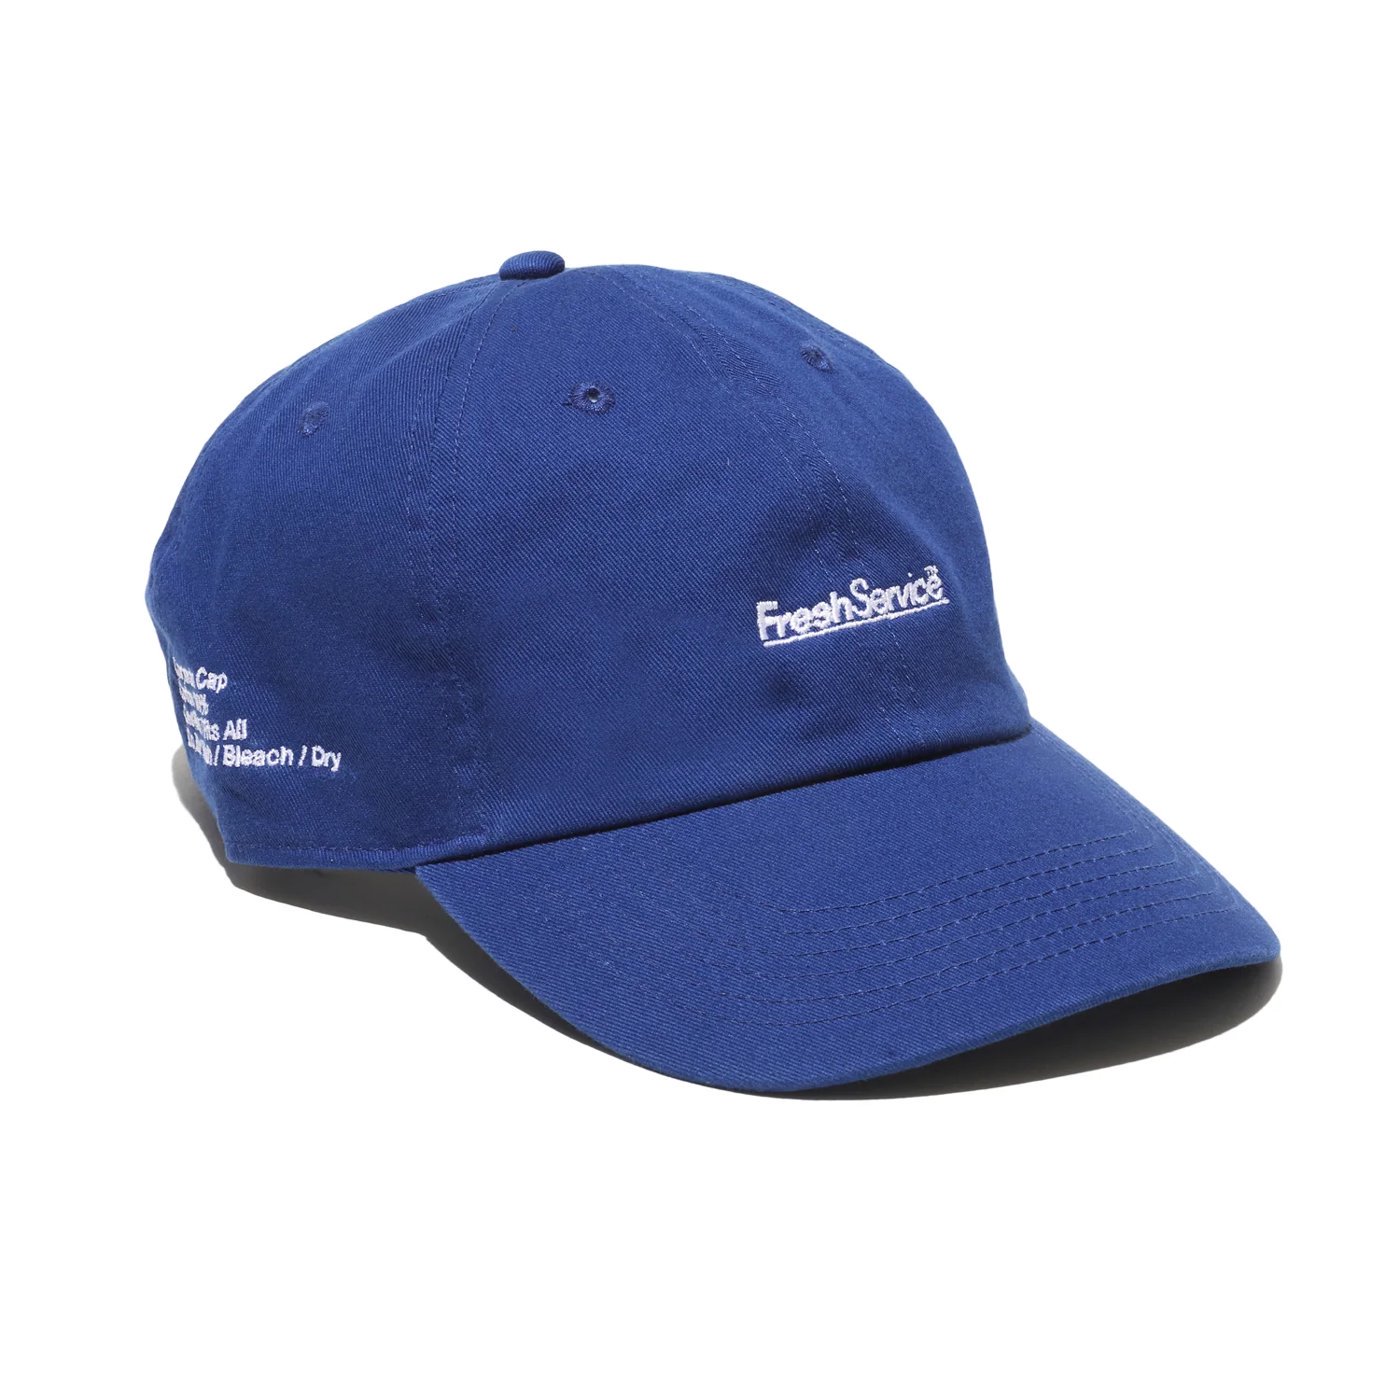 FreshService * CORPORATE CAP(12Ÿ)